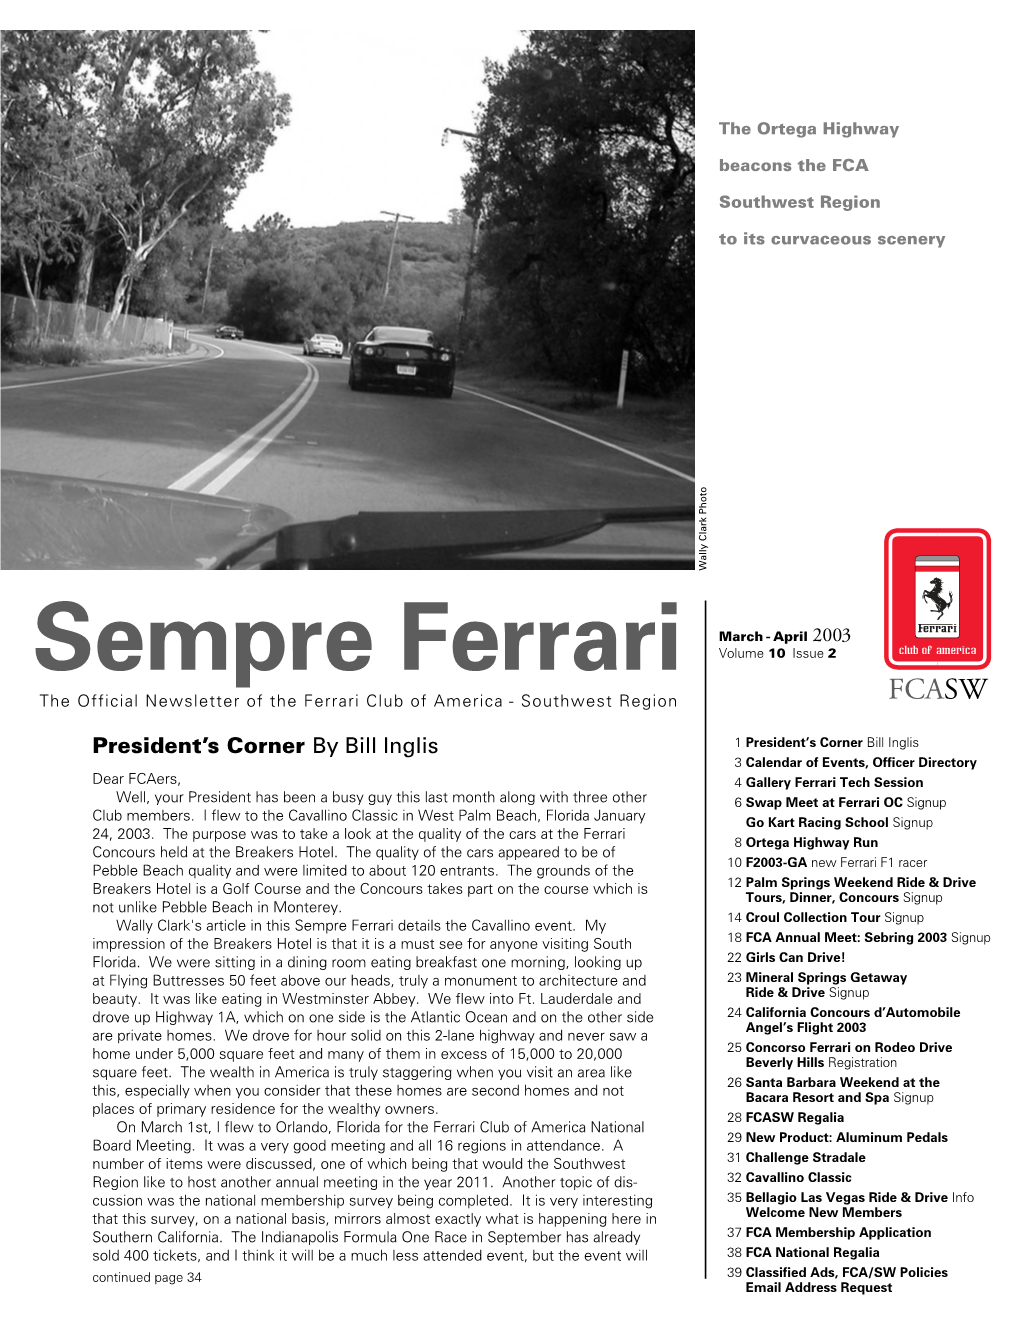 Sempre Ferrari Volume 10 Issue 2 the Official Newsletter of the Ferrari Club of America - Southwest Region FCASW